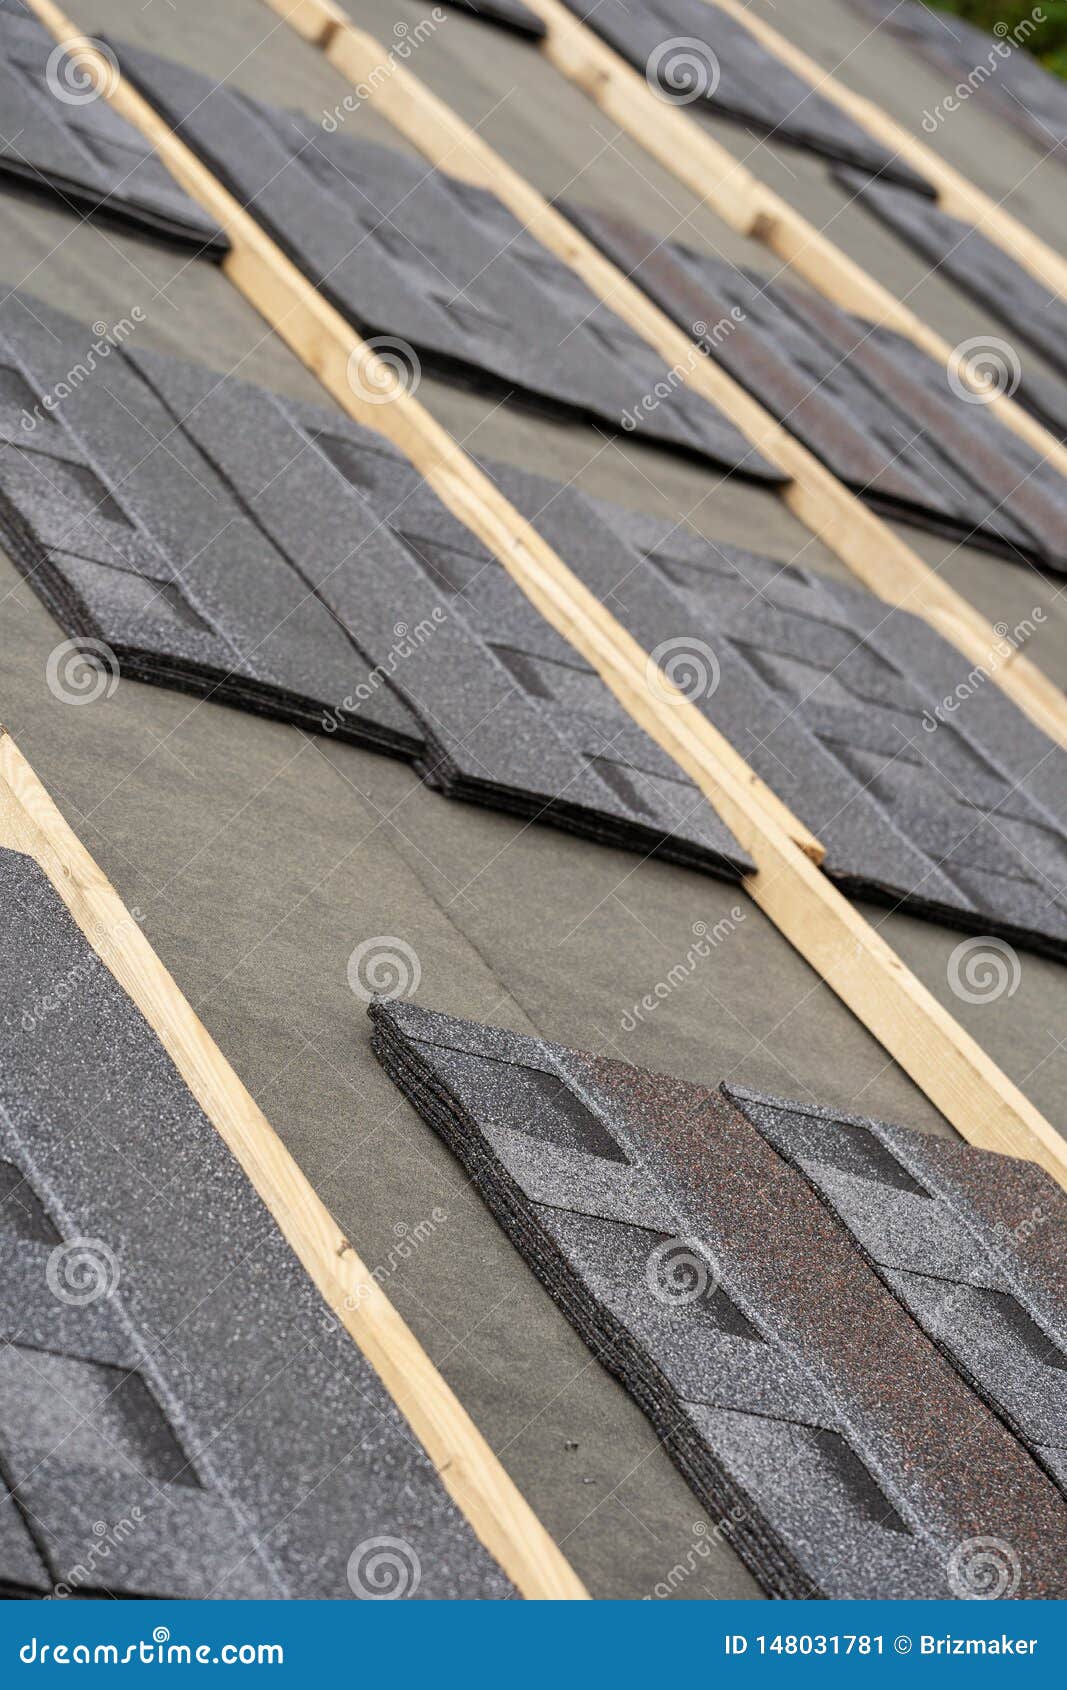 Asphalt Tile Roof on New House Under Construction Stock Image - Image